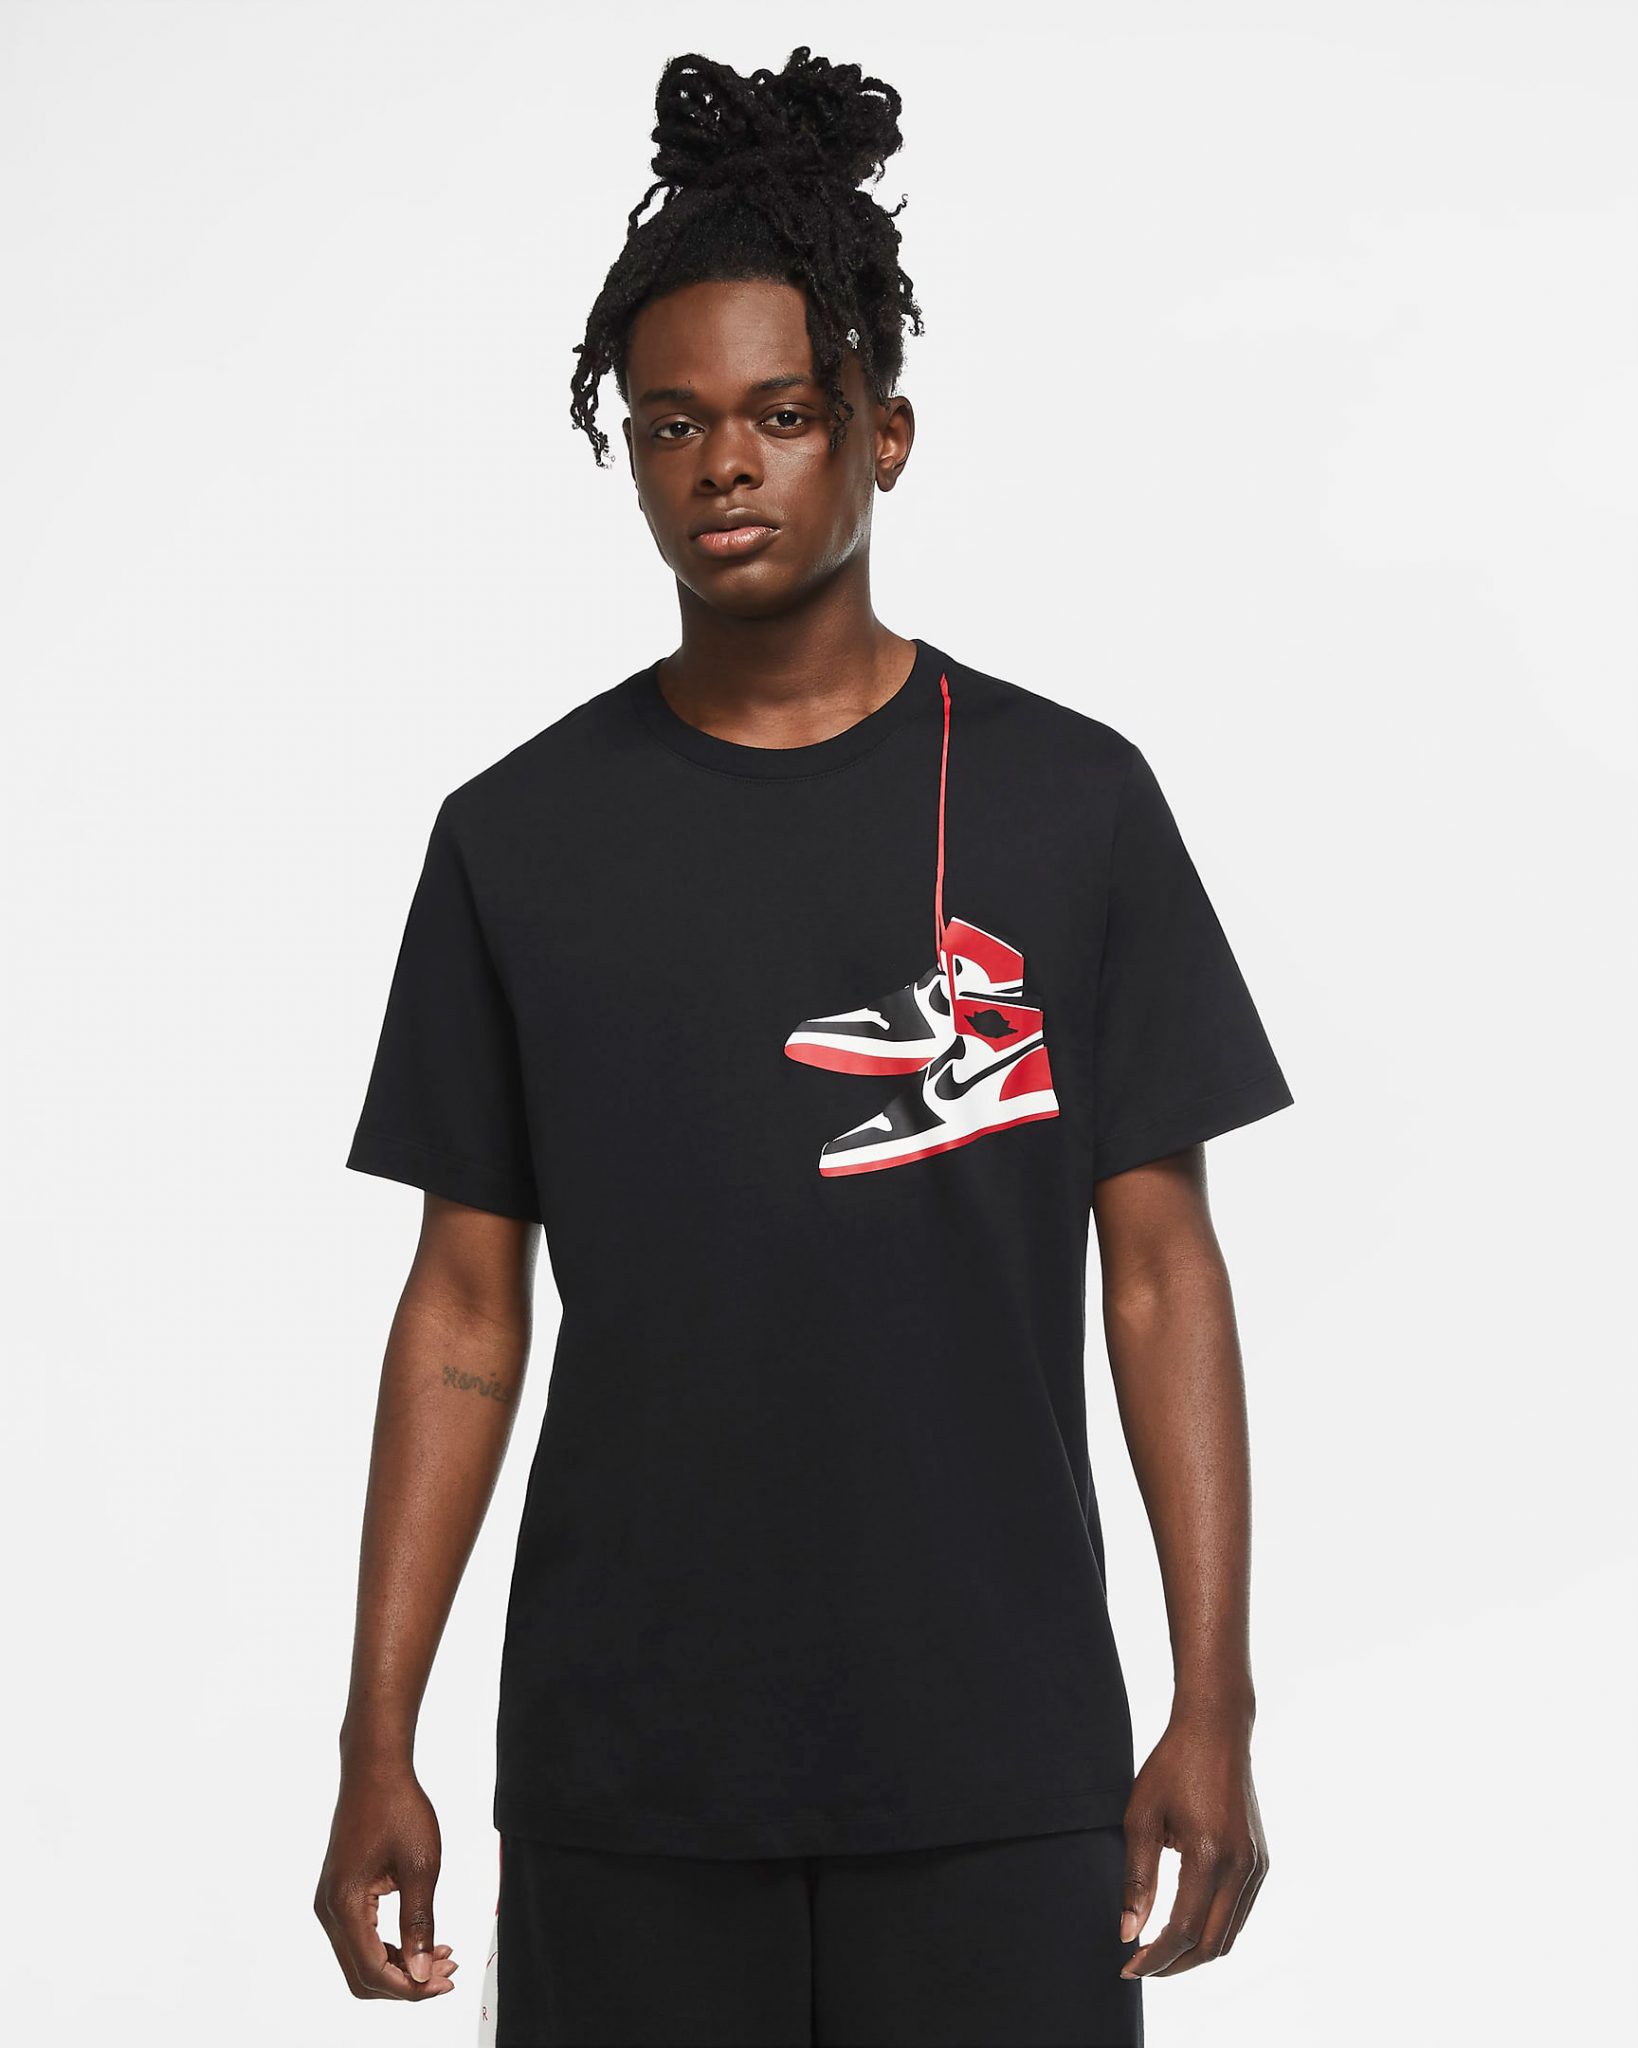 New Jordan Brand Shirts for Fall 2020 | SneakerFits.com